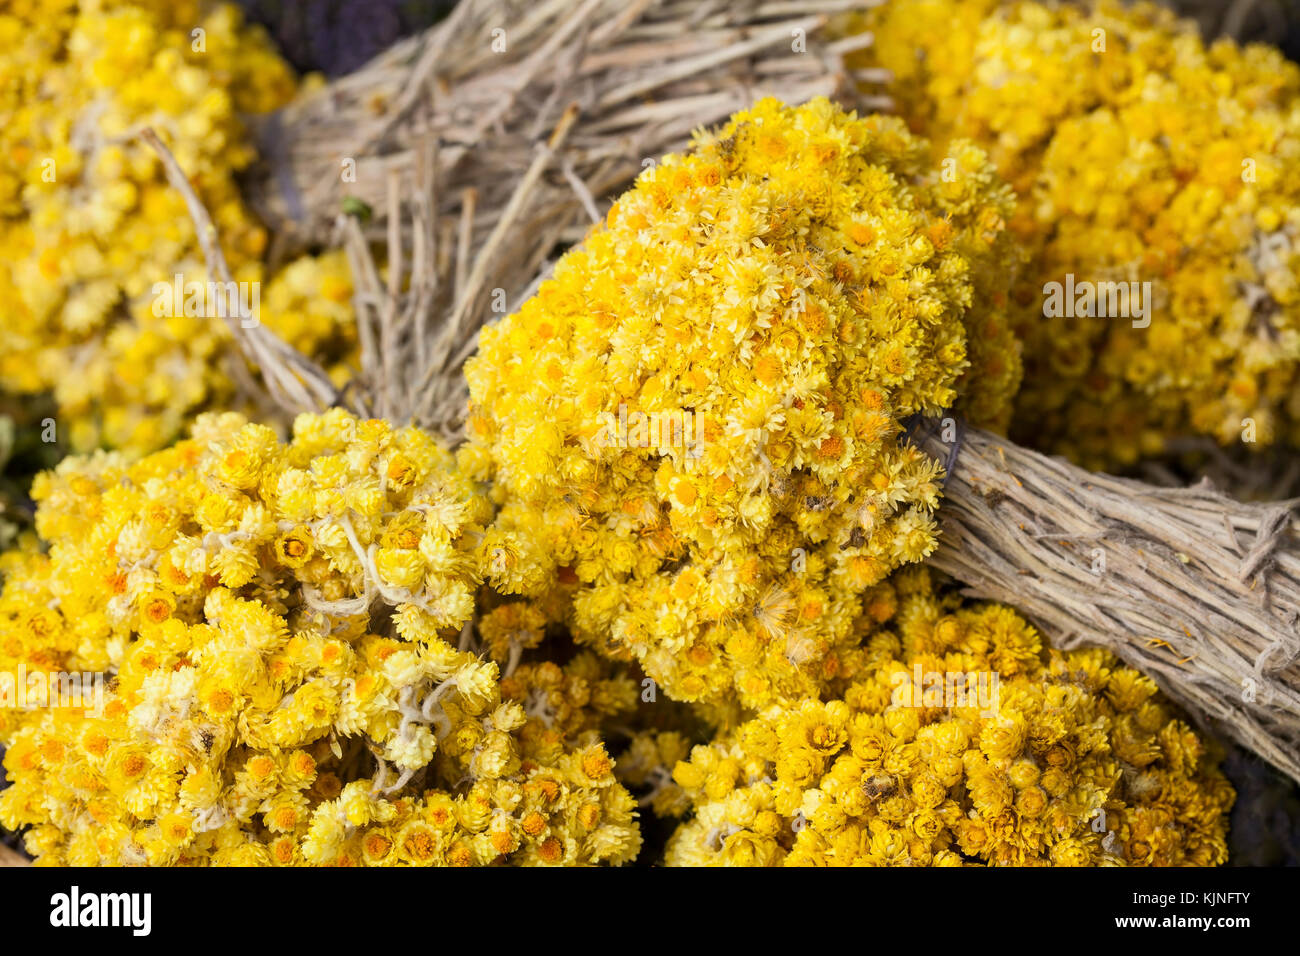 Helichrysum arenarium( dwarf everlast or immortelle) flowers Stock Photo